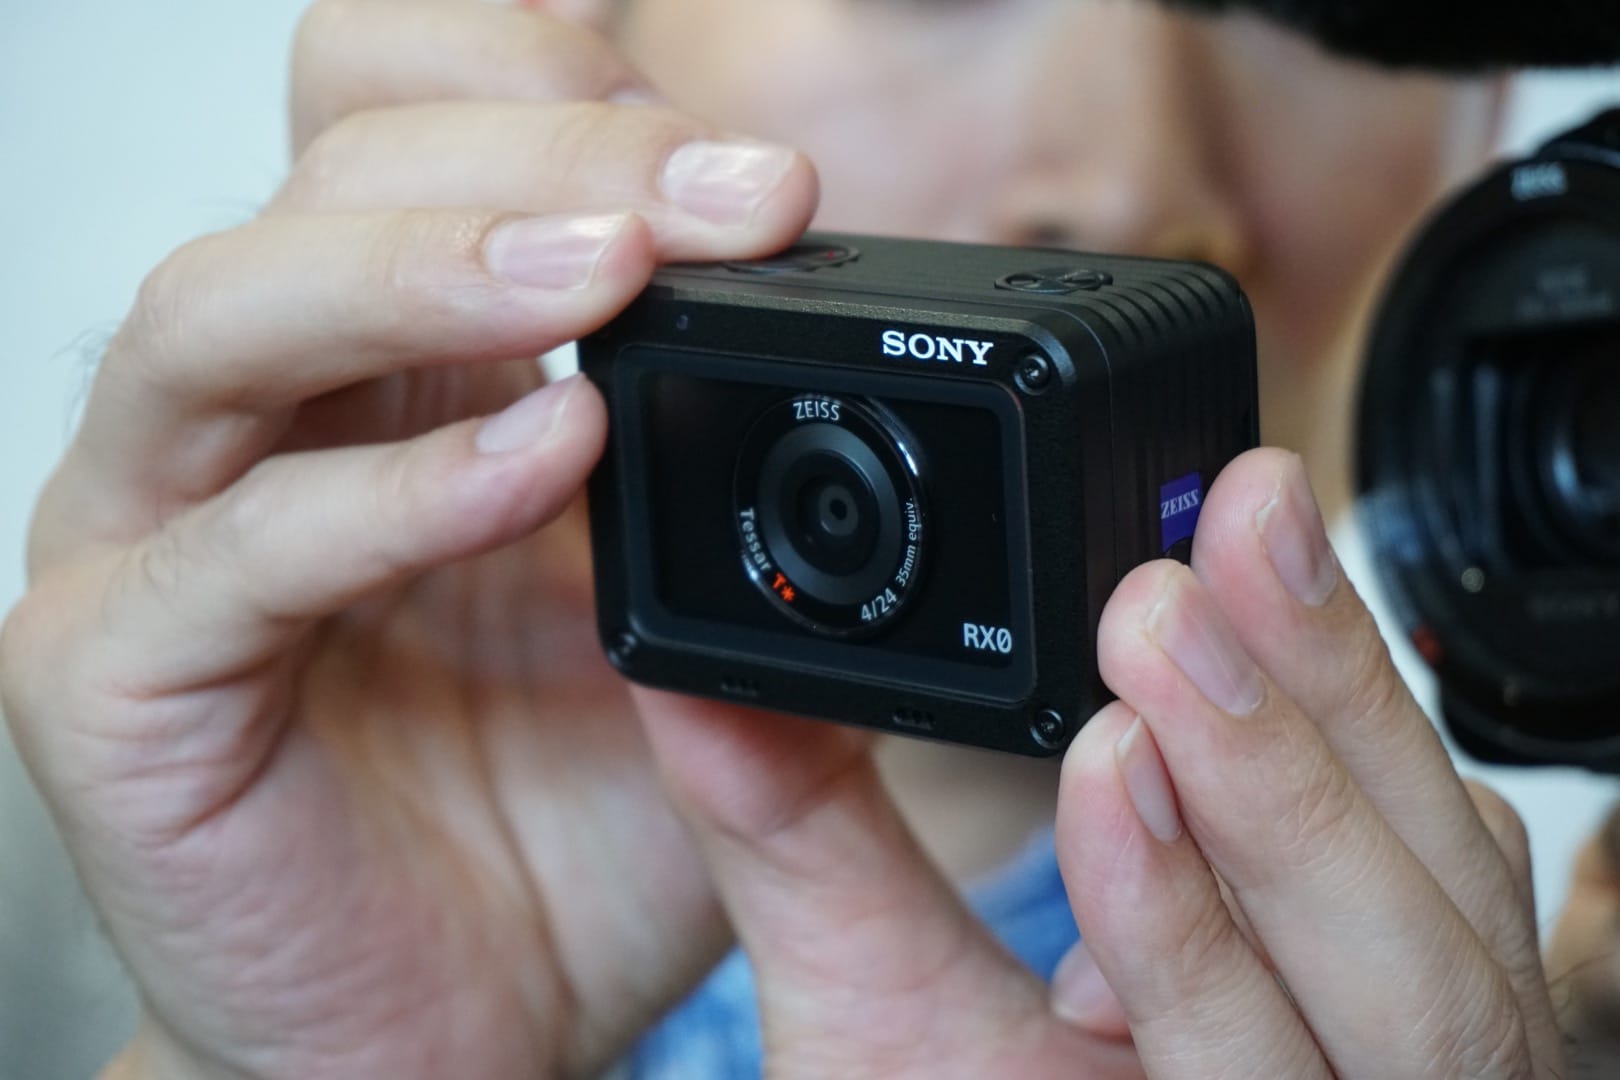 Sony เปิดตัว RX0 กล้องจิ๋วรุ่นโปรใช้เซนเซอร์ 1 นิ้ว ราคา 24,000